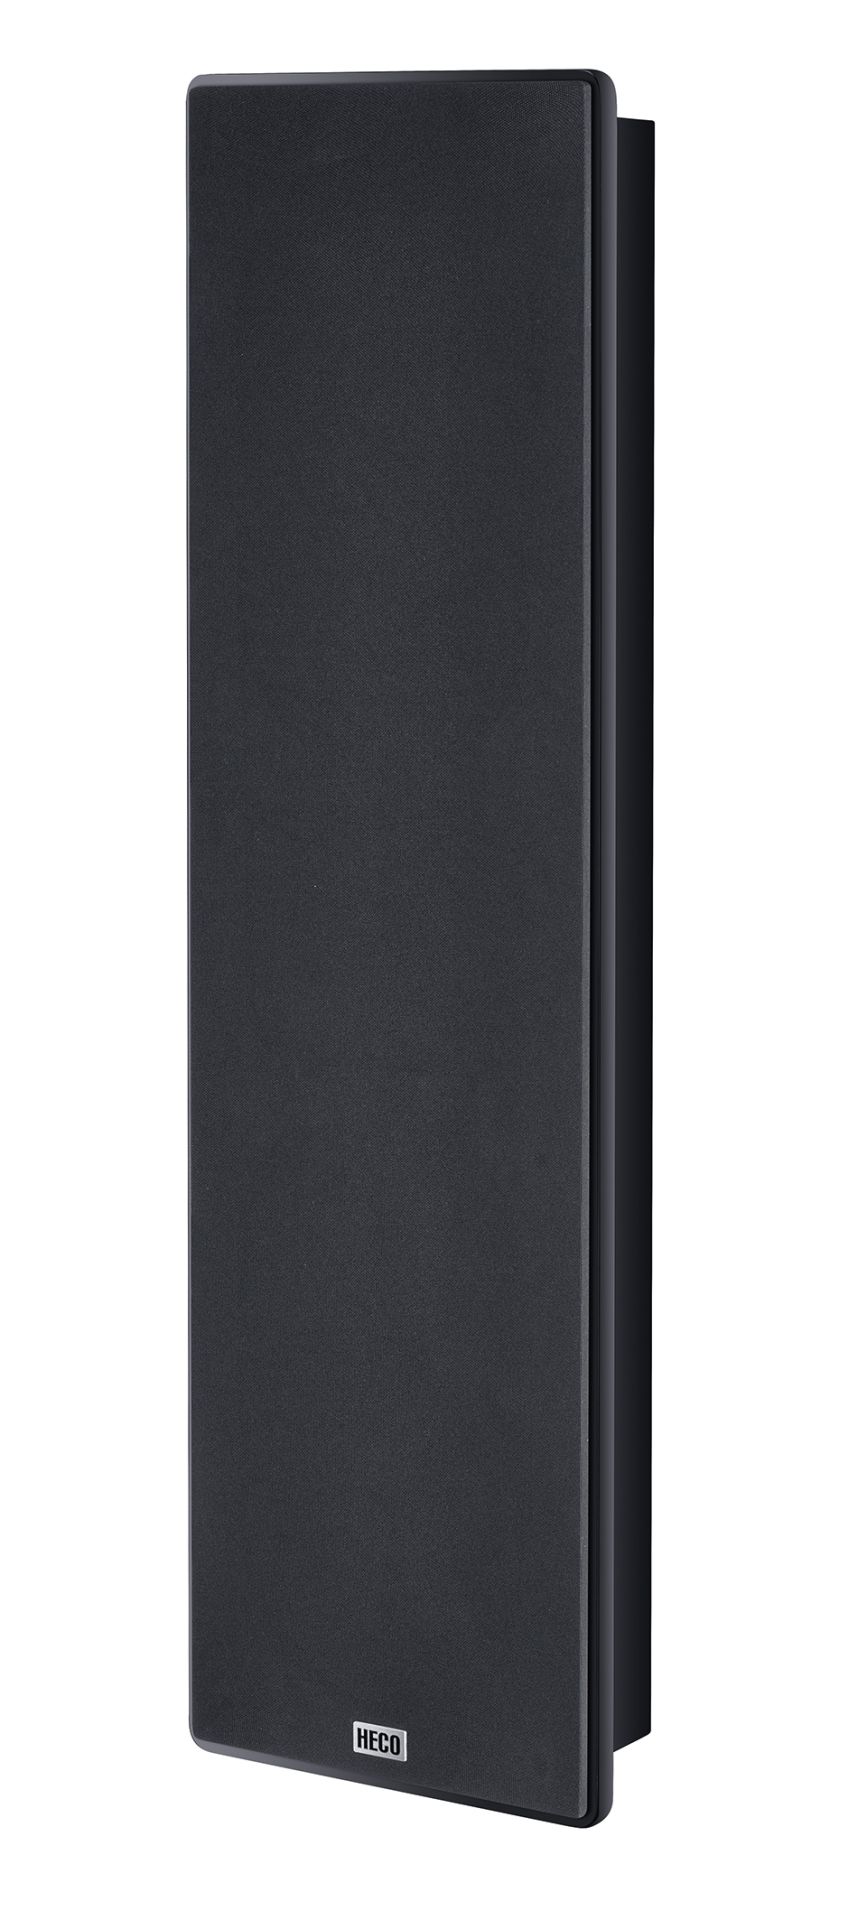 Heco Ambient 44 F Wandlautsprecher (Stückpreis) schwarz